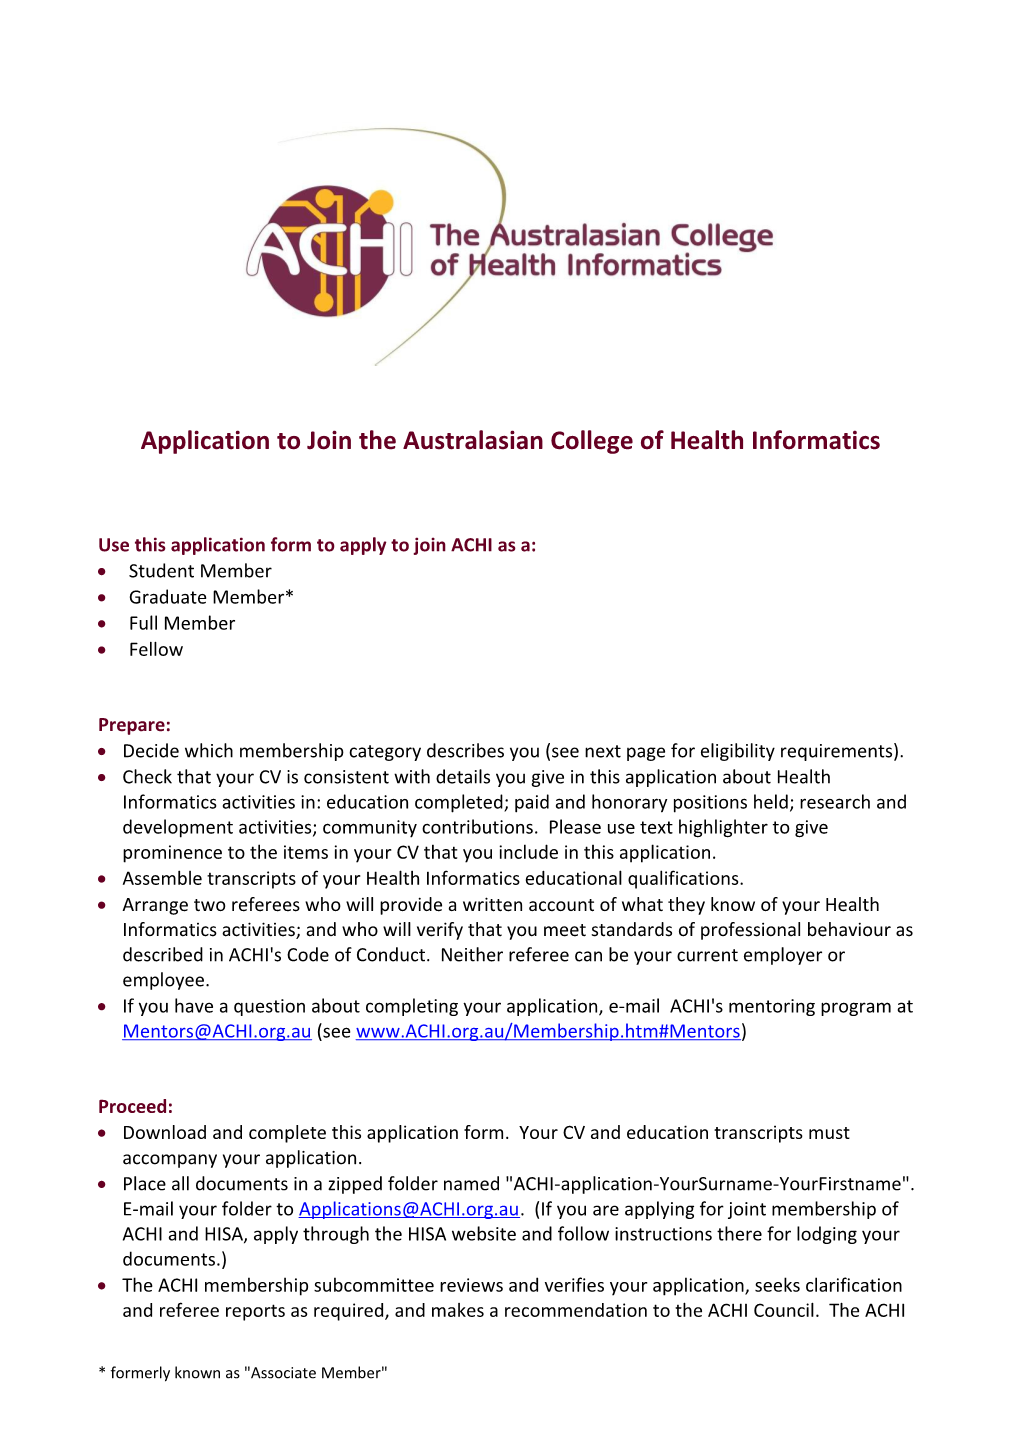 Australasian College of Health Informatics